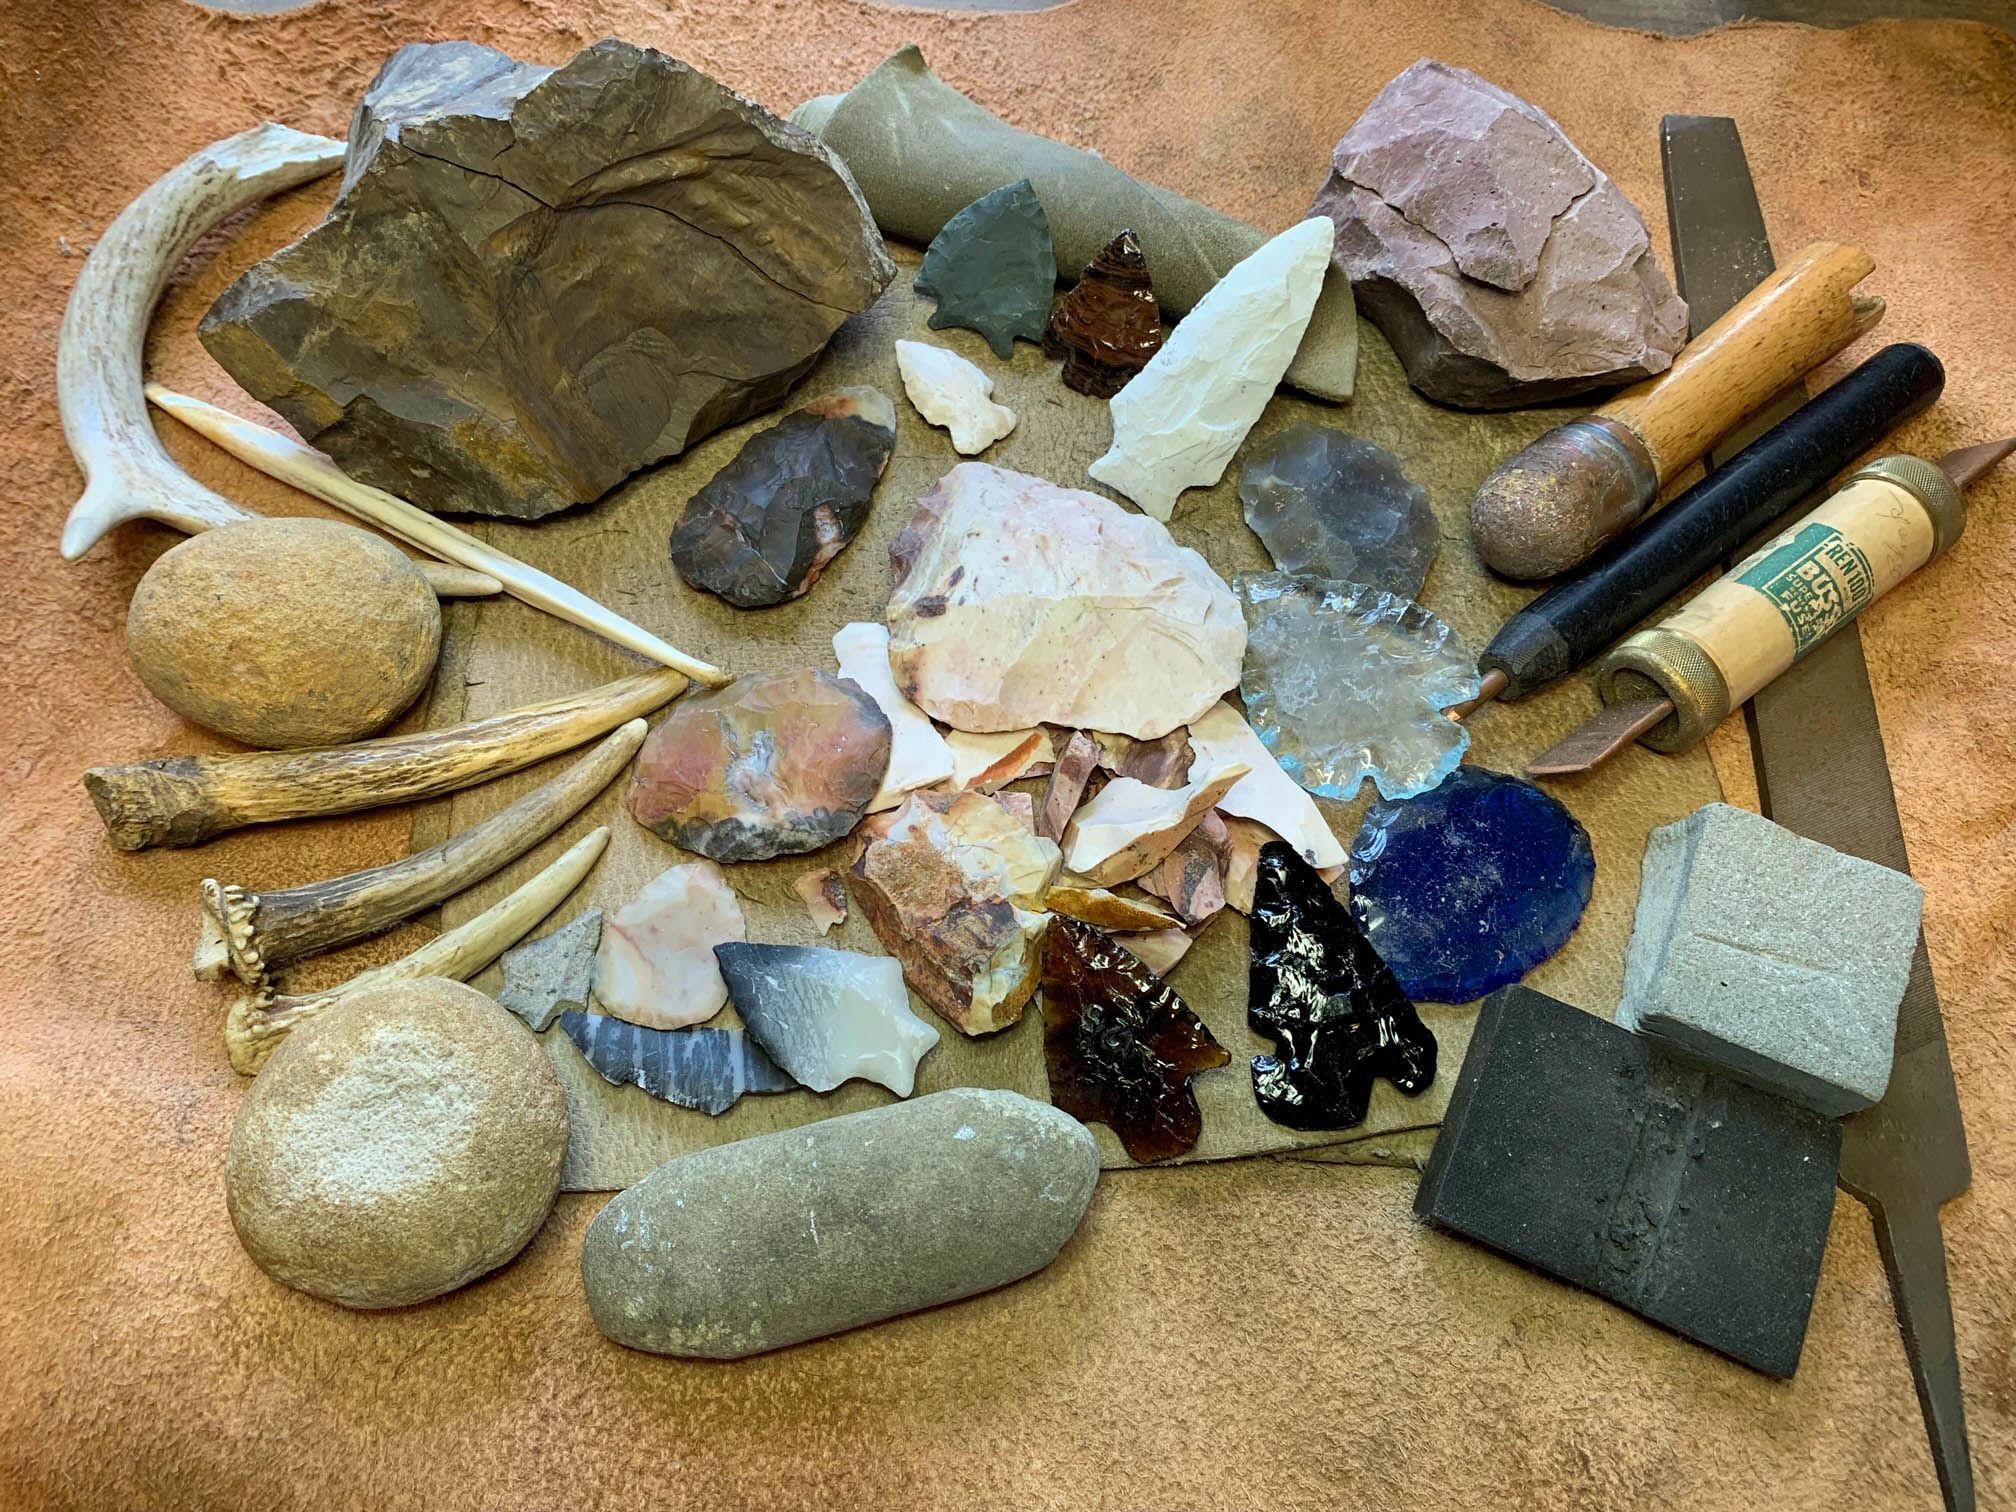 Flintknapping tools and materials